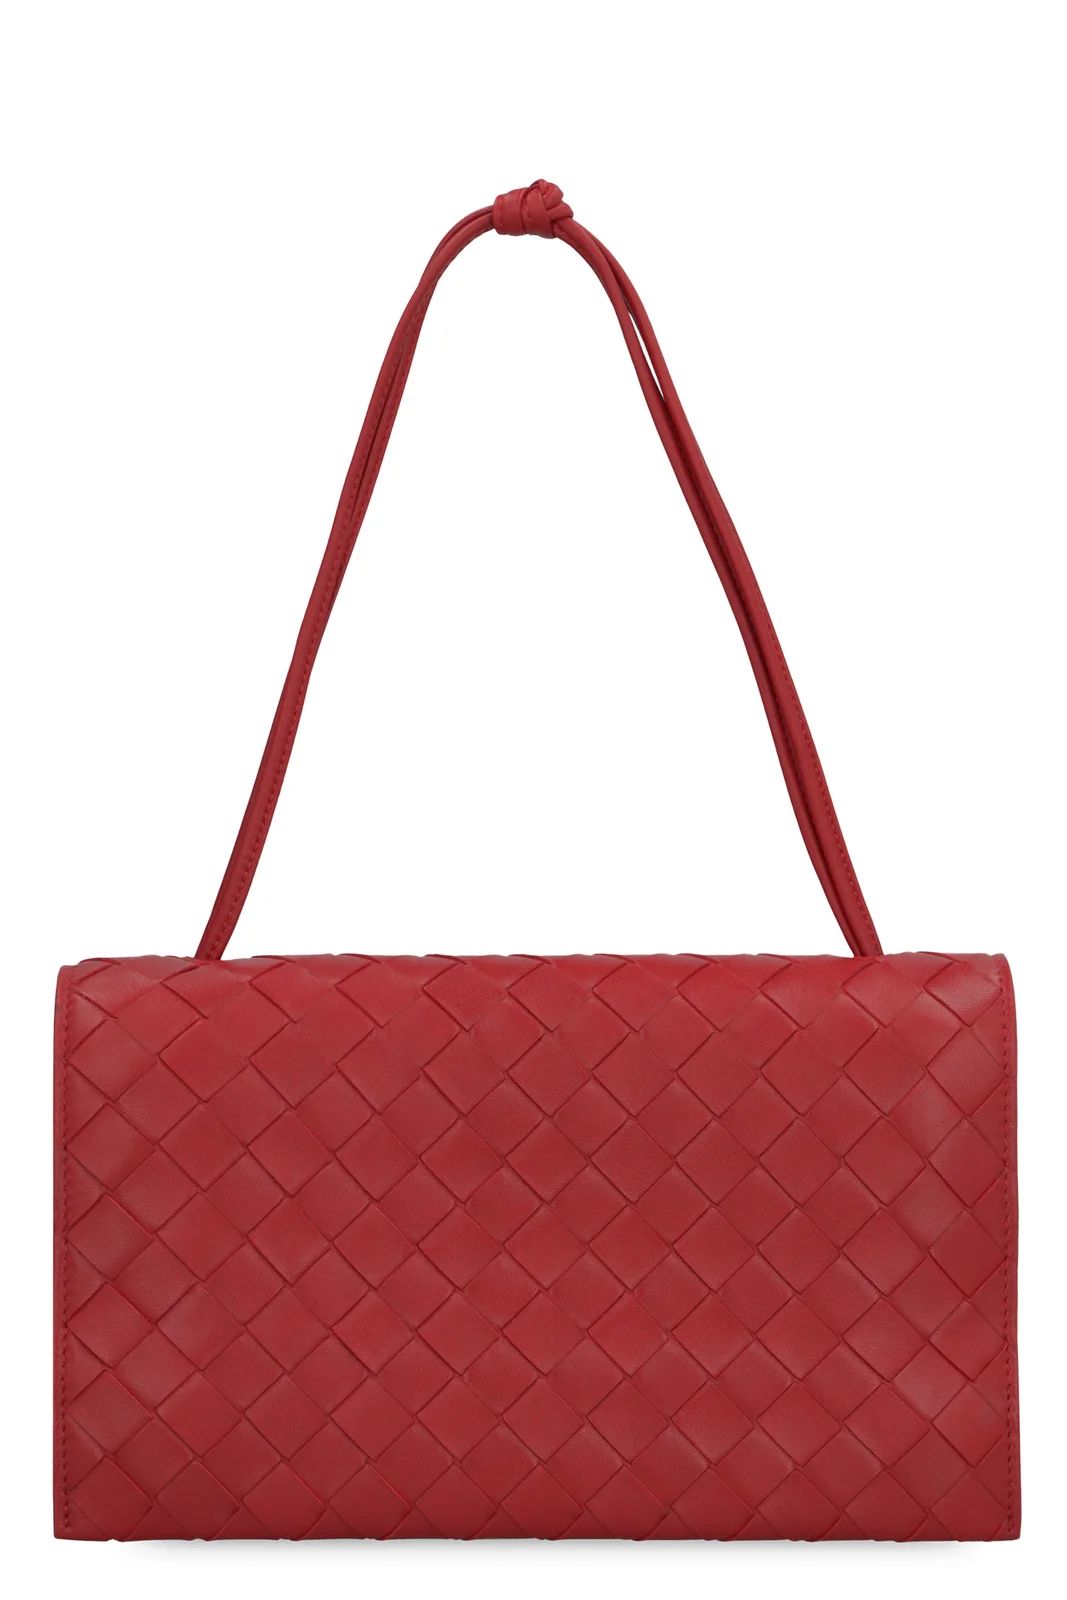 Bottega Veneta Mini Intrecciato Shoulder Bag | Cettire Global